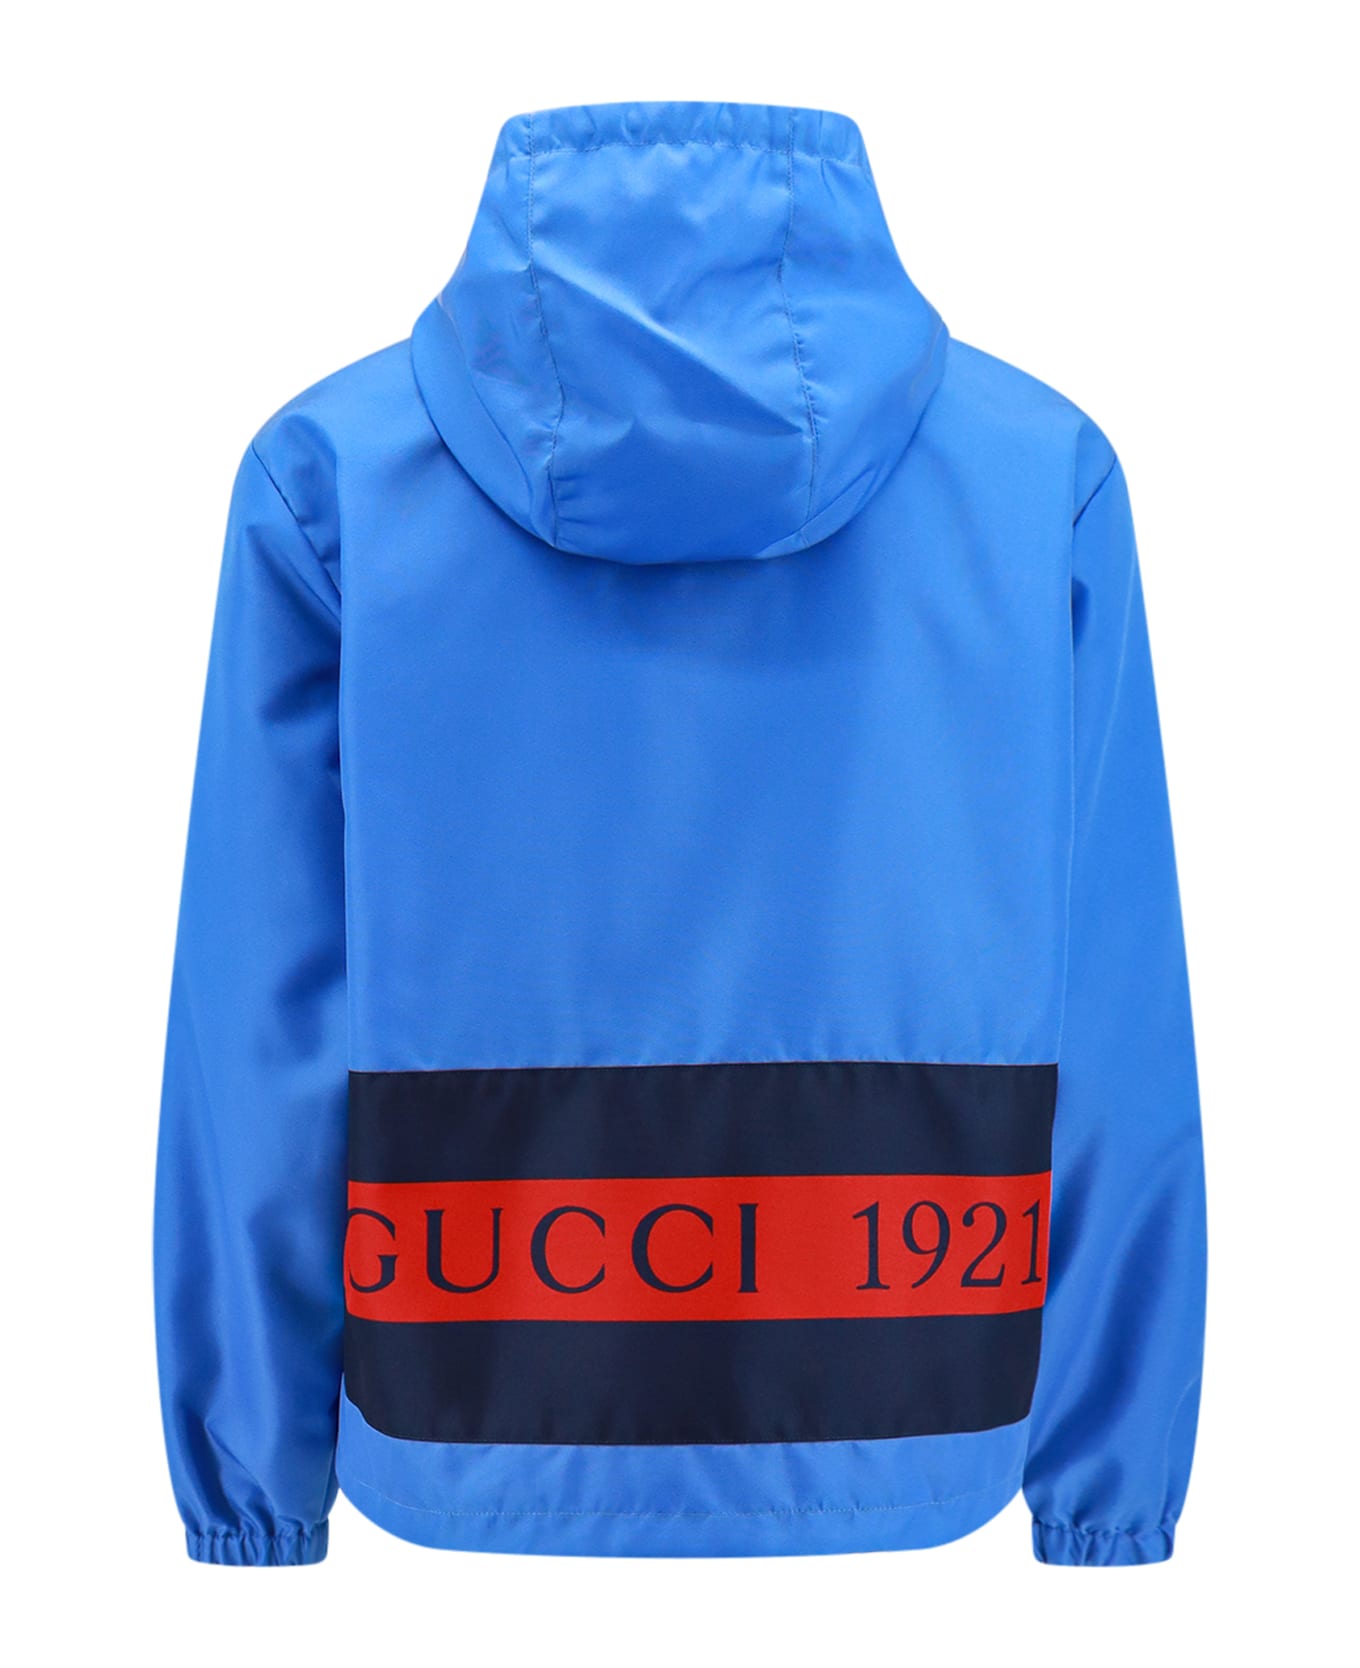 Gucci Jacket - Blue ジャケット